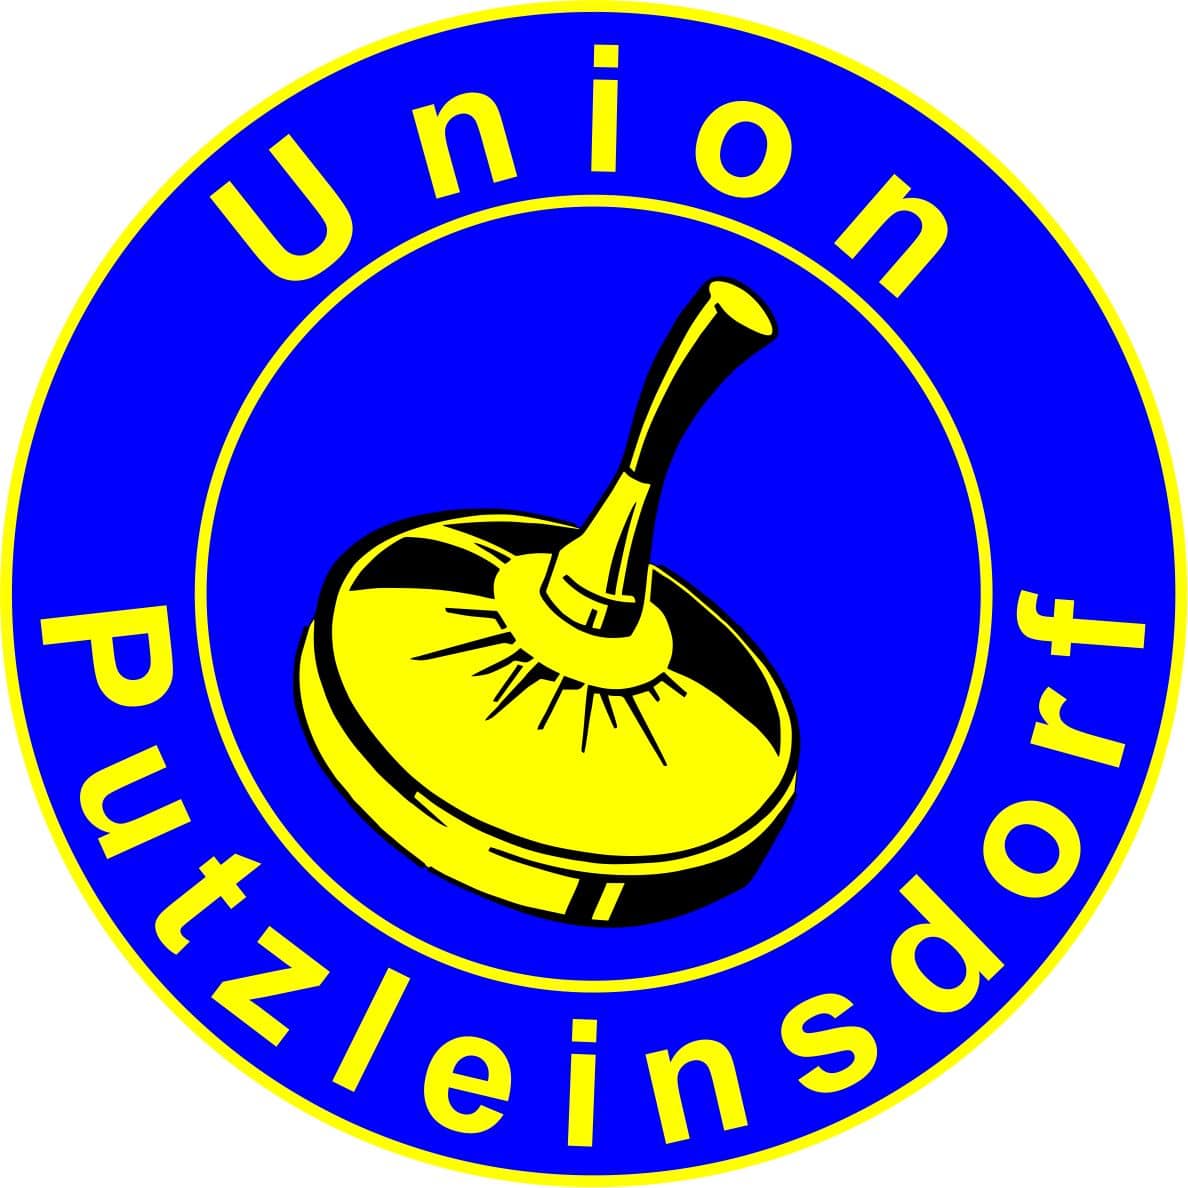 Union Stocksport Putzleinsdorf